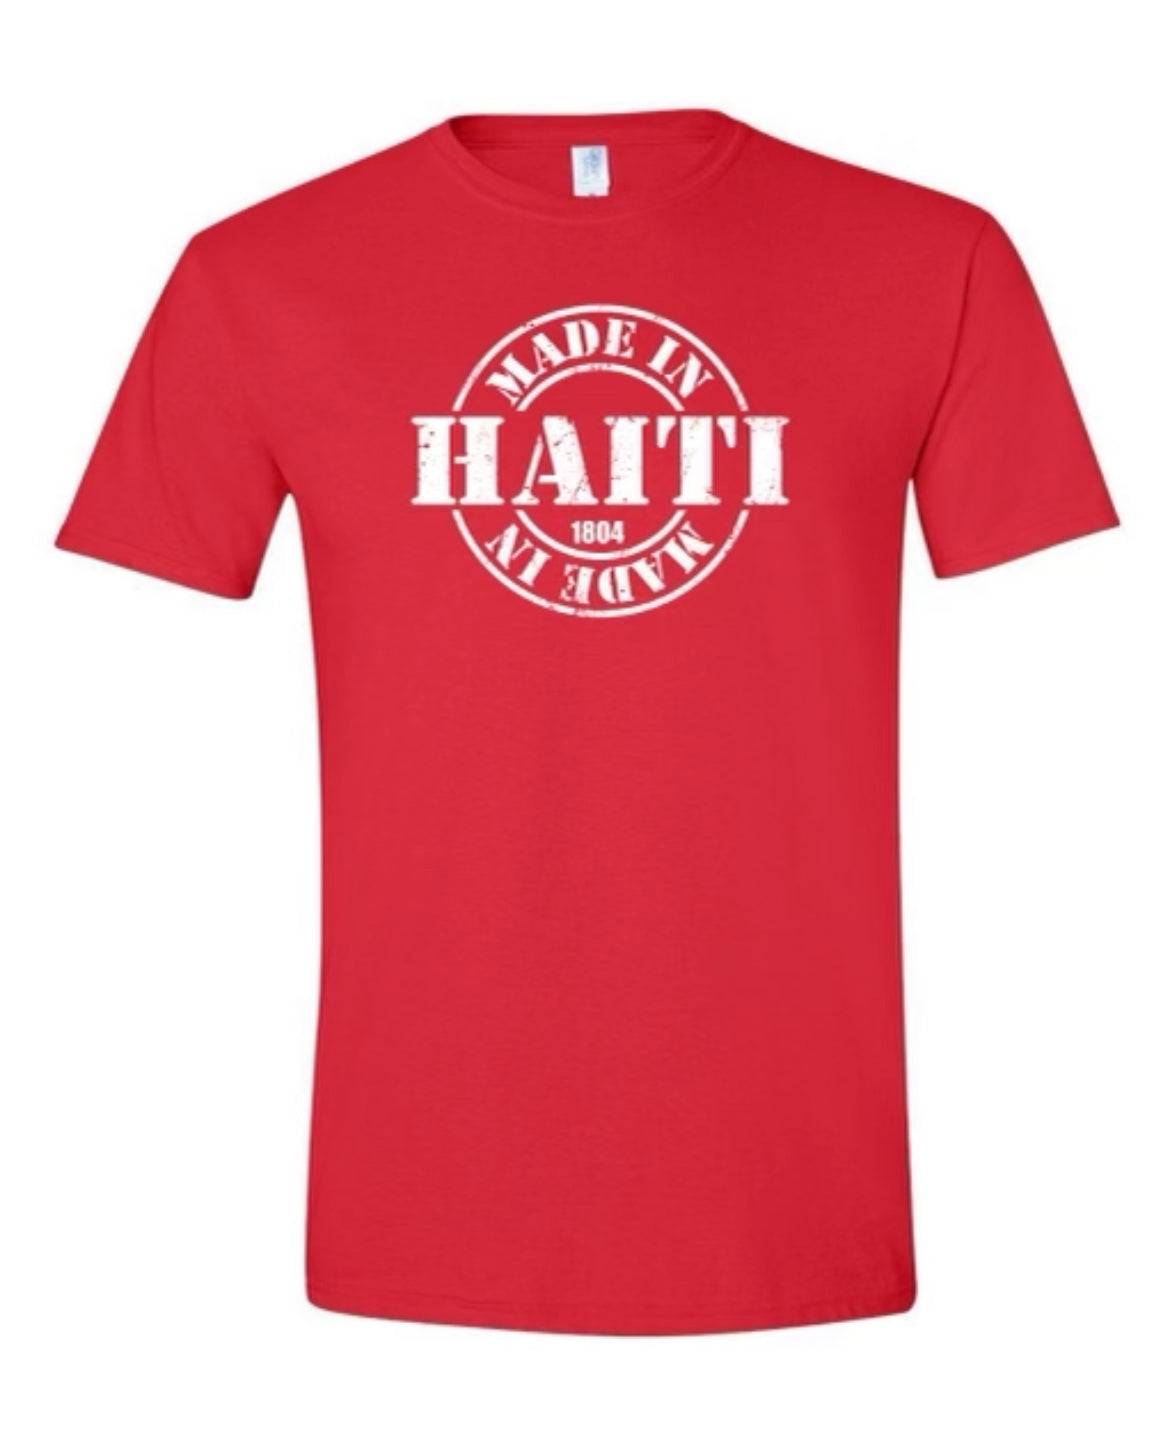 Made in Haiti Puff Red T-shirt